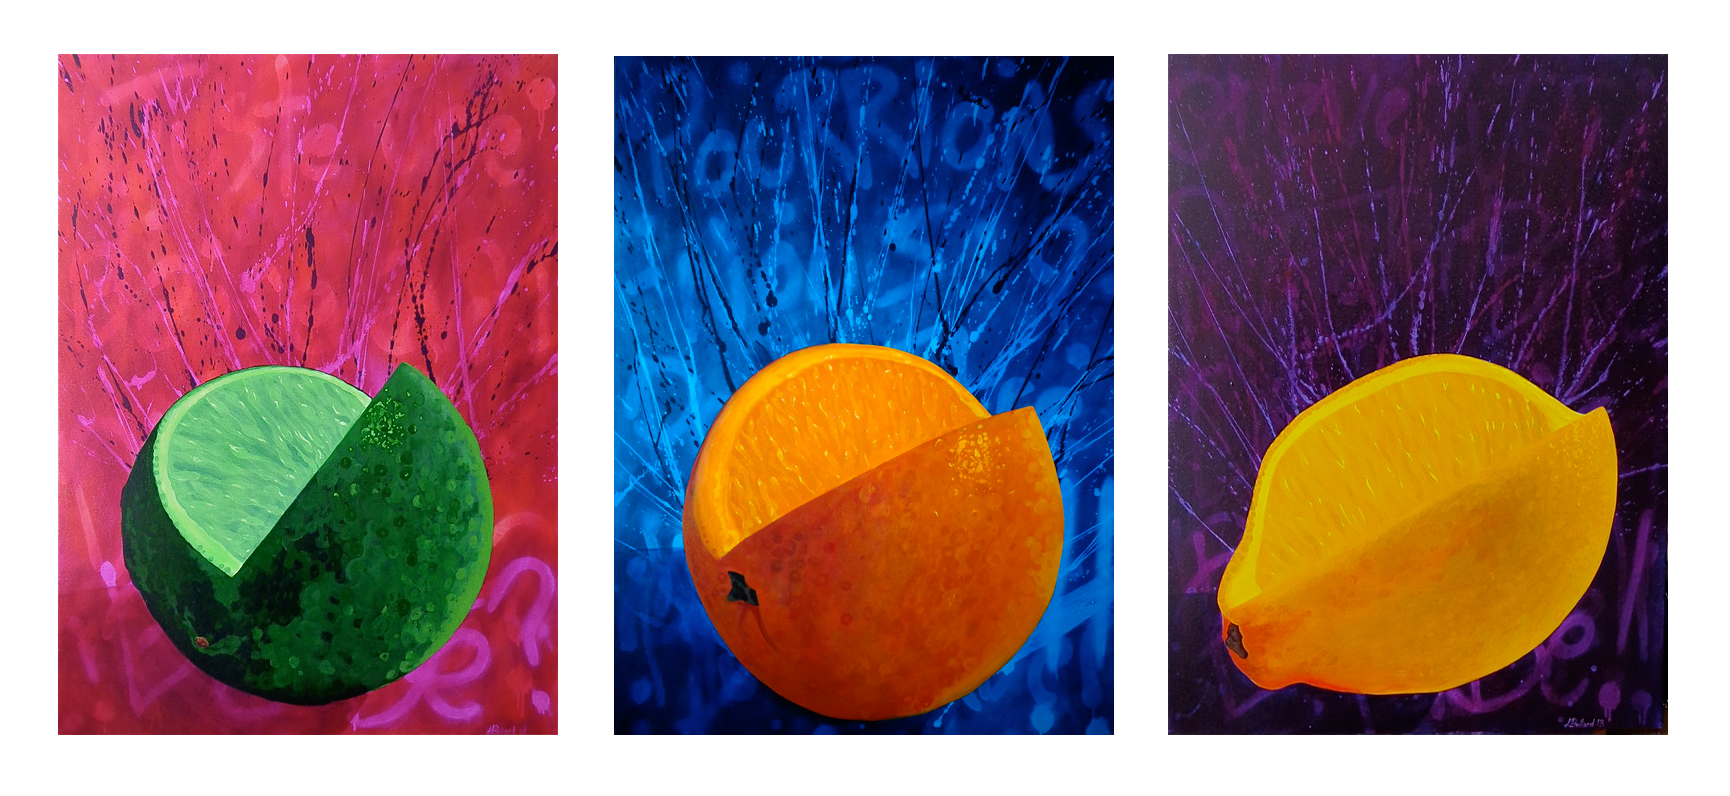   Fruit Triptych  - acrylic on canvas 30" x 40" x 3 